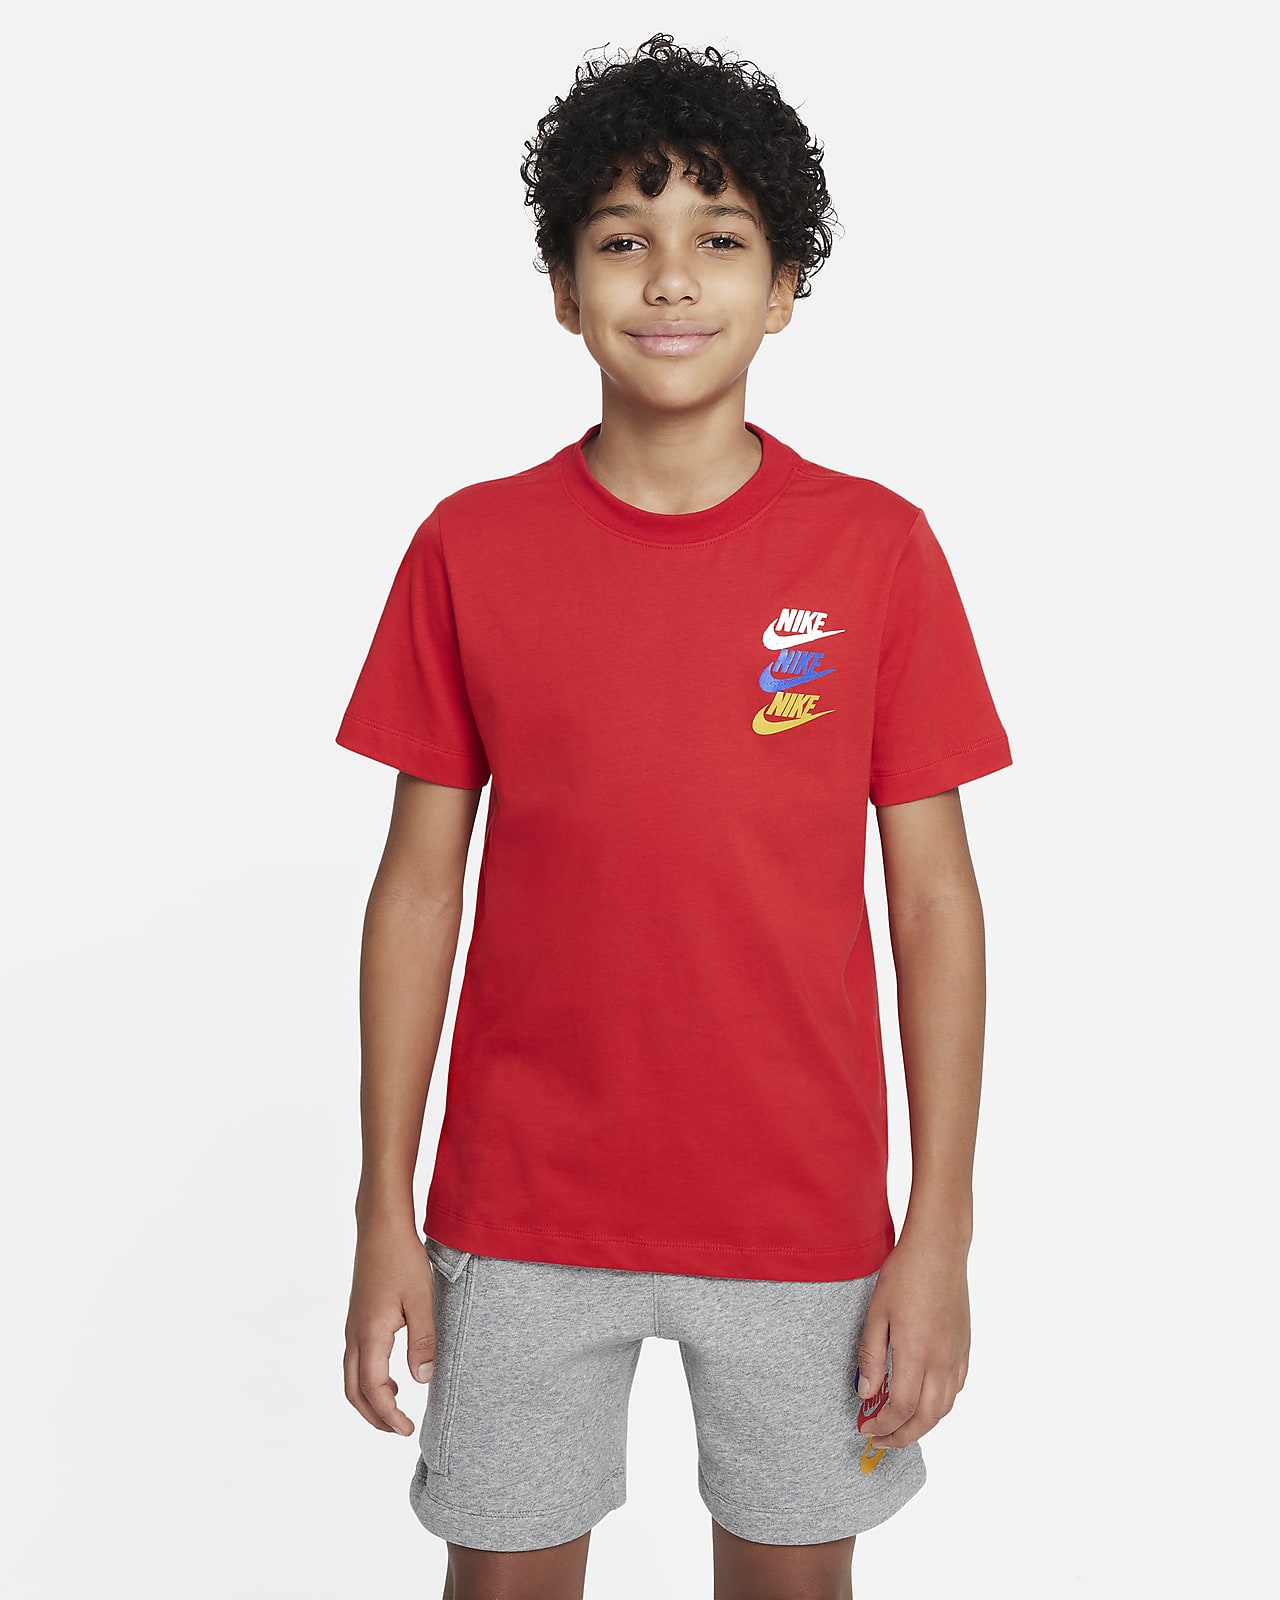 T-shirt Nike Sportswear Standard Issue Júnior (Rapaz)